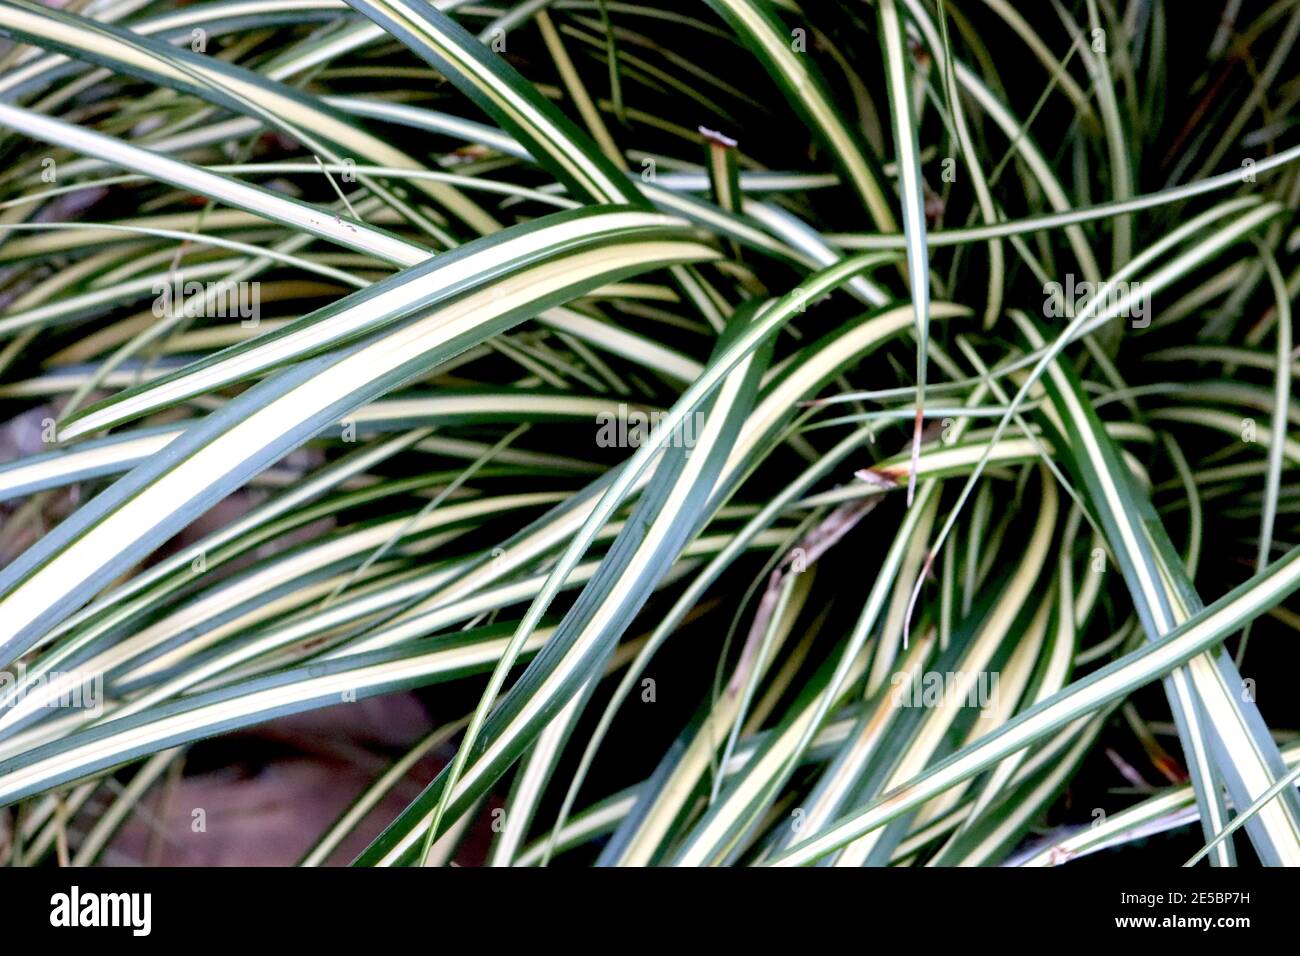 Carex oshimensis ‘Evergold‘ Japanese sedge Evergold – dark green ornamental grass with central cream stripe, January, England, UK Stock Photo